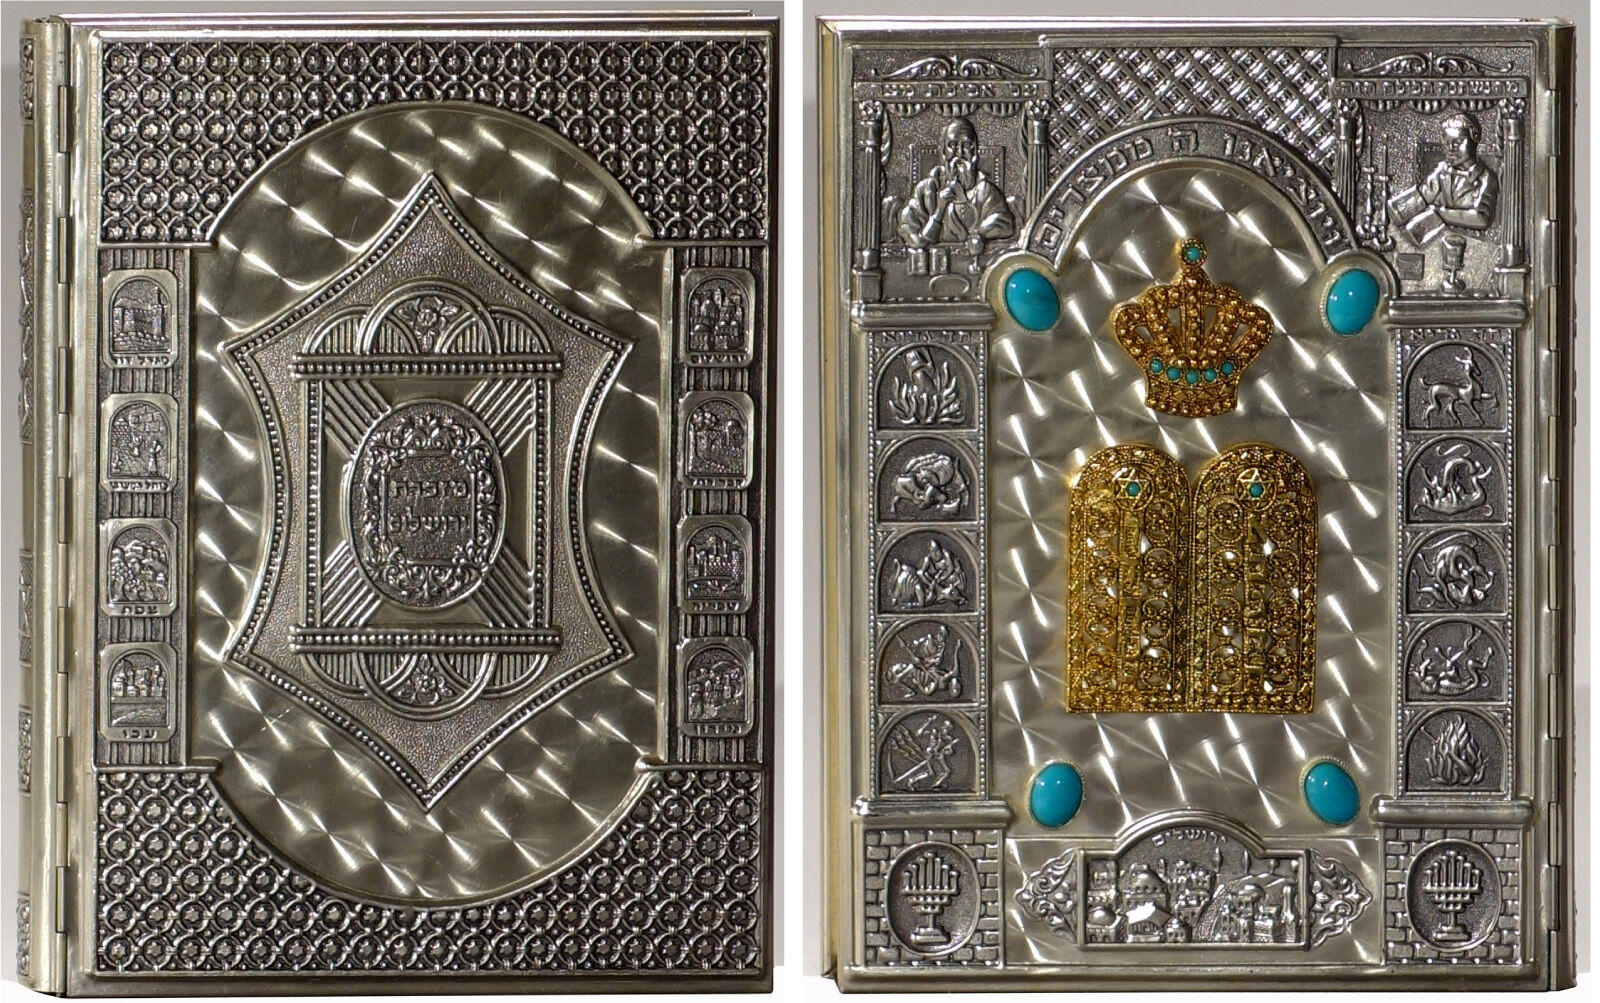 Passover Haggadah Arthur Szyk illustration metal binding with inlaid turquoise